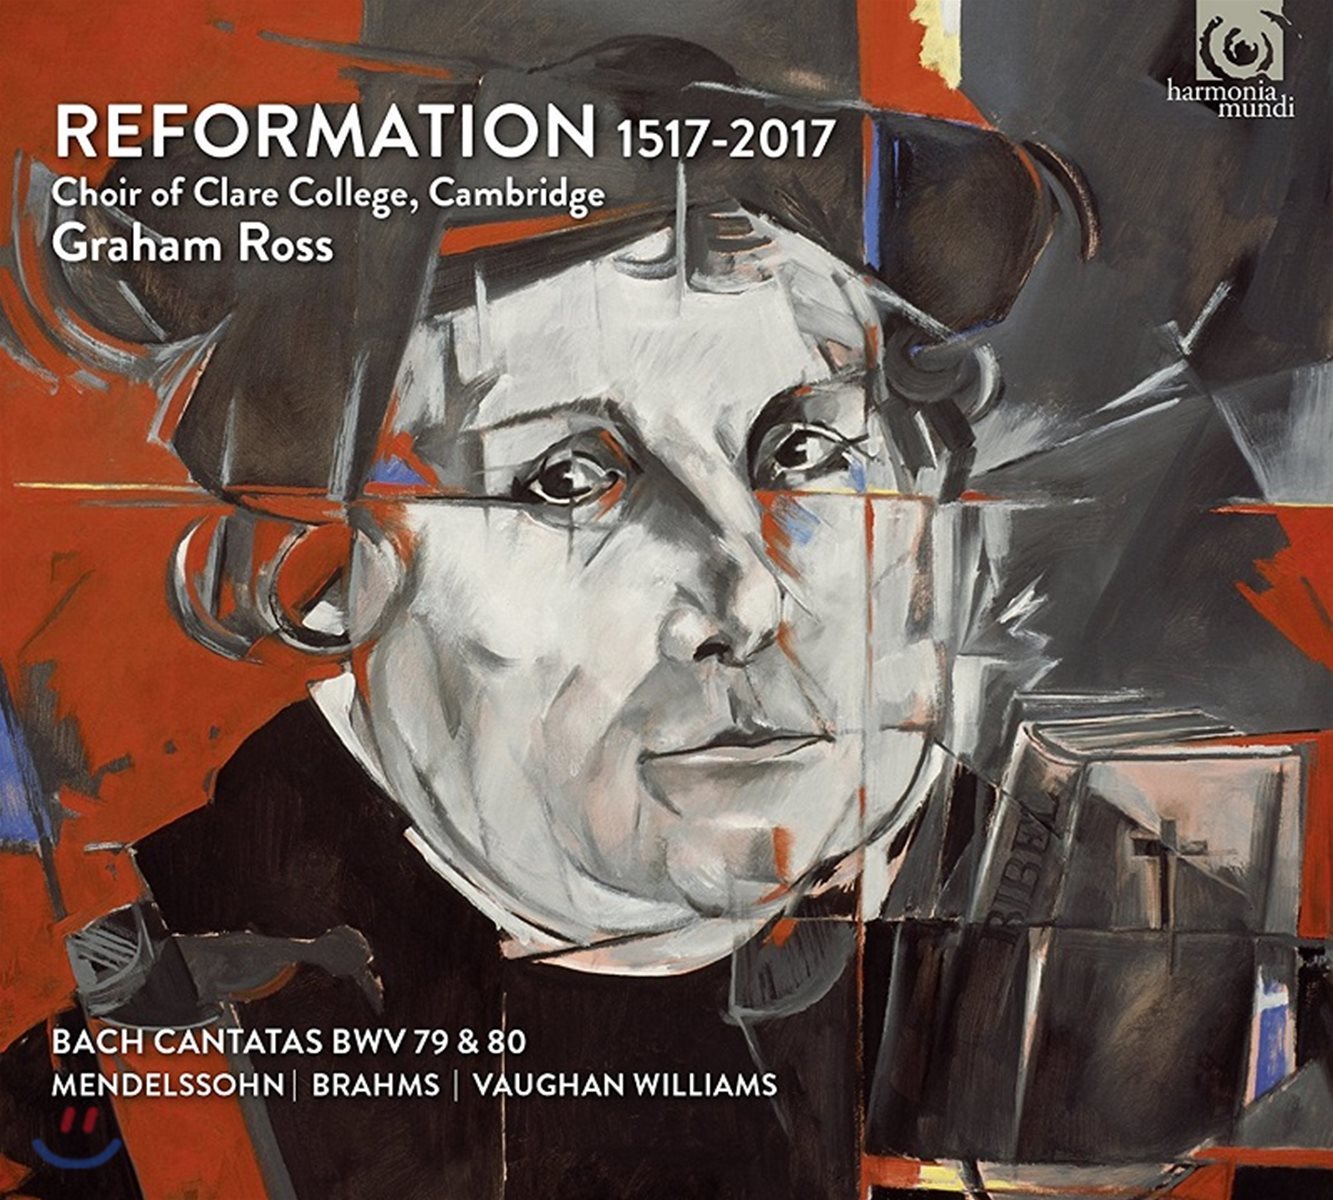 Choir of Clare College Cambridge 종교개혁 1517-2017: 500주년 기념 음반 - 캠브리지 클레어 컬리지 합창단 (Reformation 1517-2017 - J.S. Bach: Cantatas BWV79 & 80 / Mendelsshn Etc.)